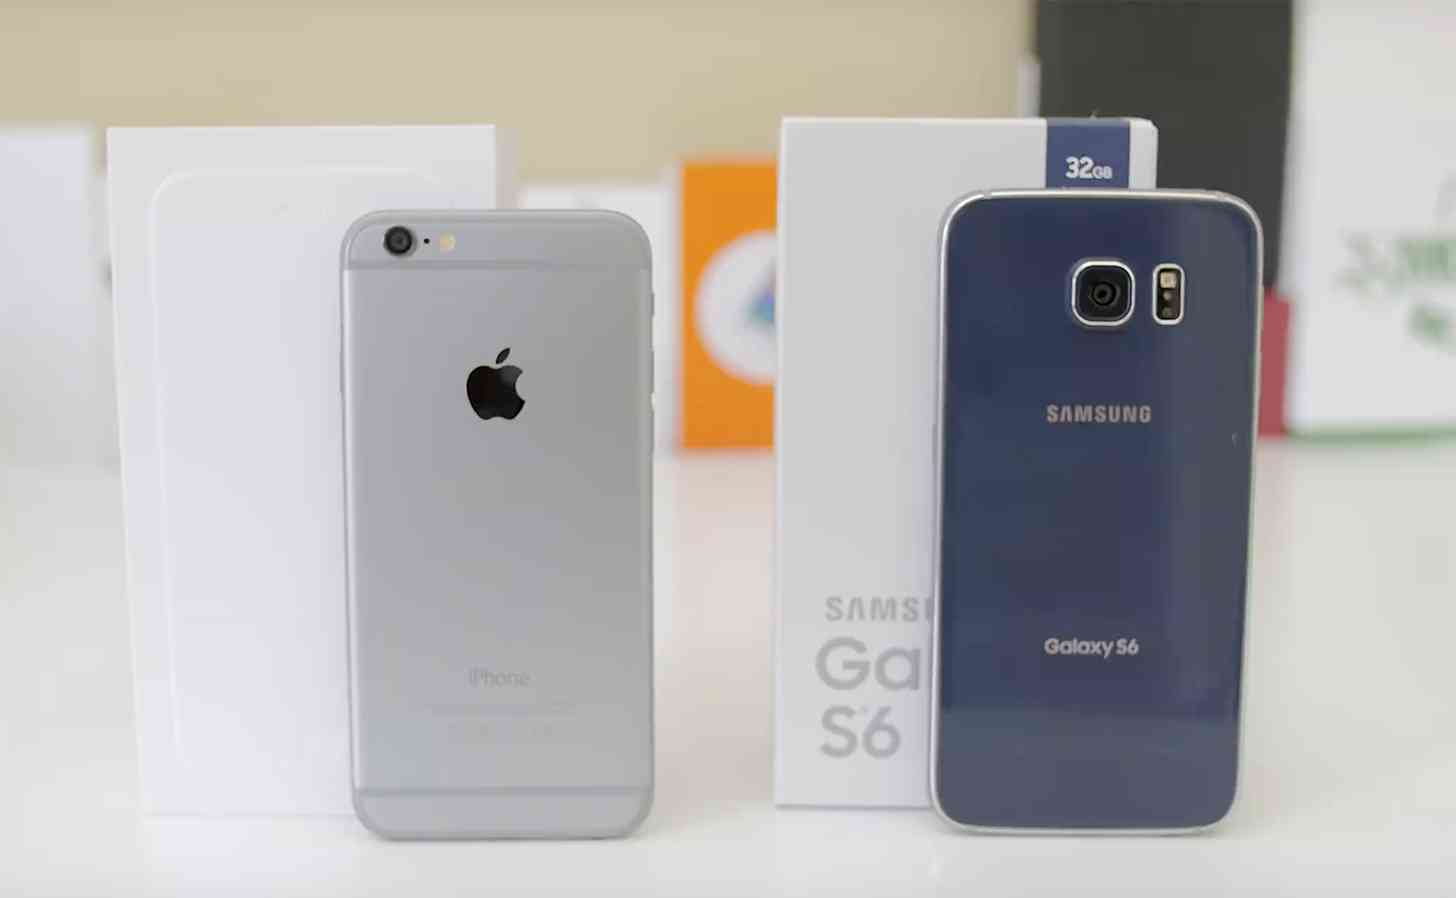 iPhone 6, Galaxy S6 comparison